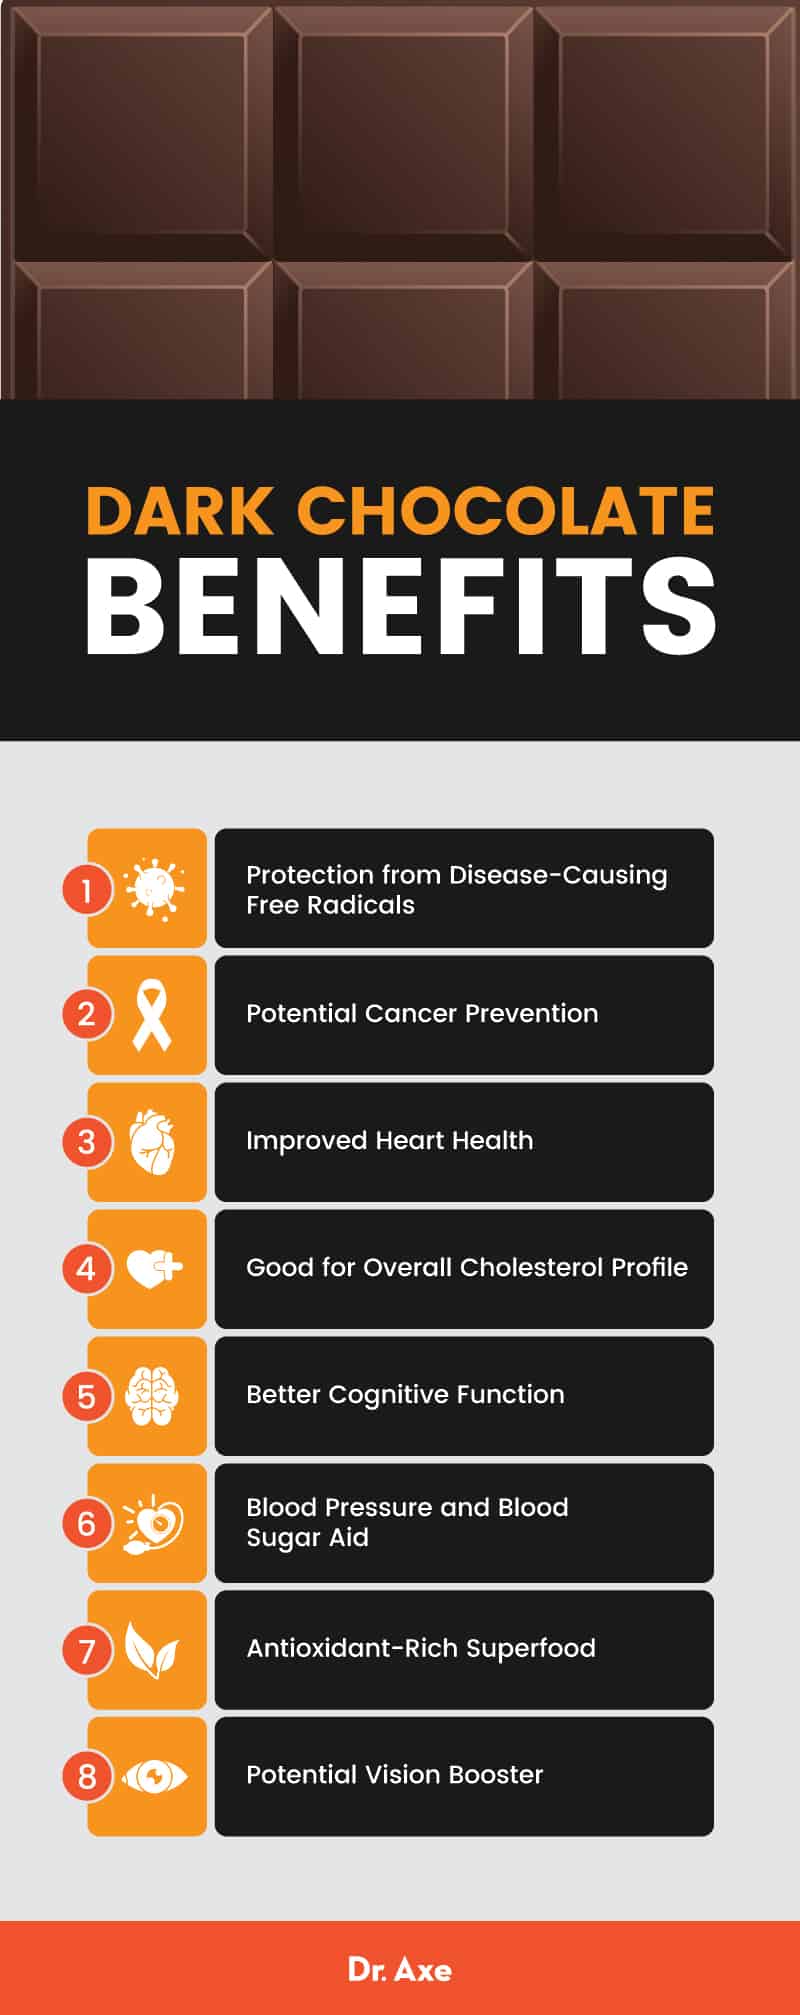 Benefits of dark chocolate - Dr. Axe